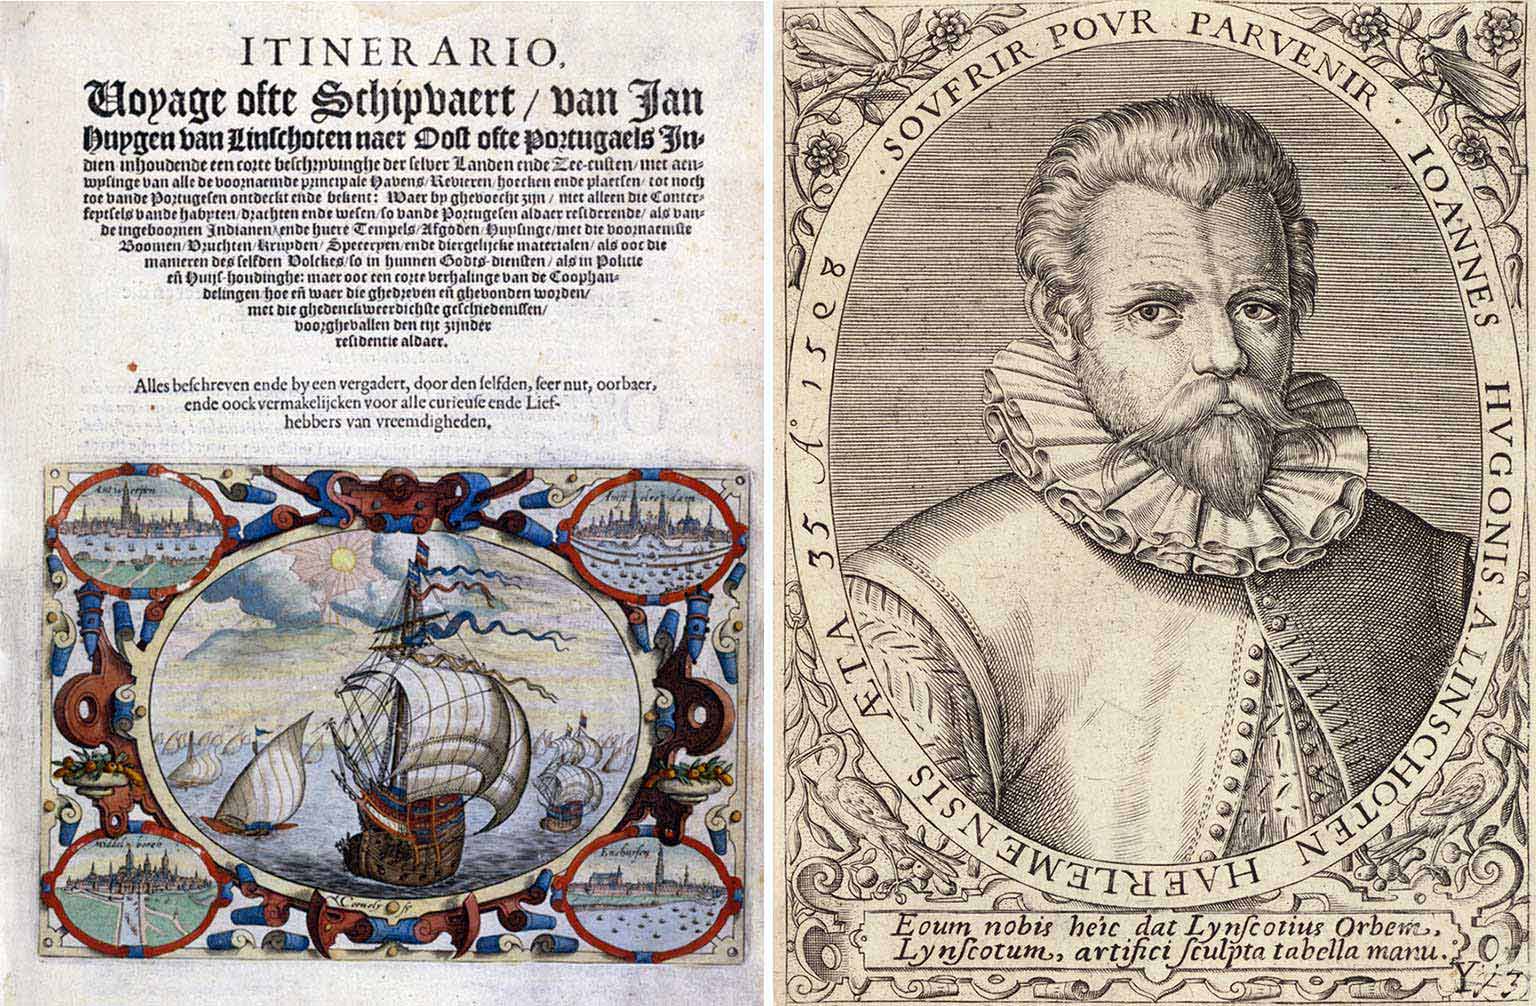 Title page from Itinerario and portrait of Jan Huygen van Linschoten by Theodor de Bry